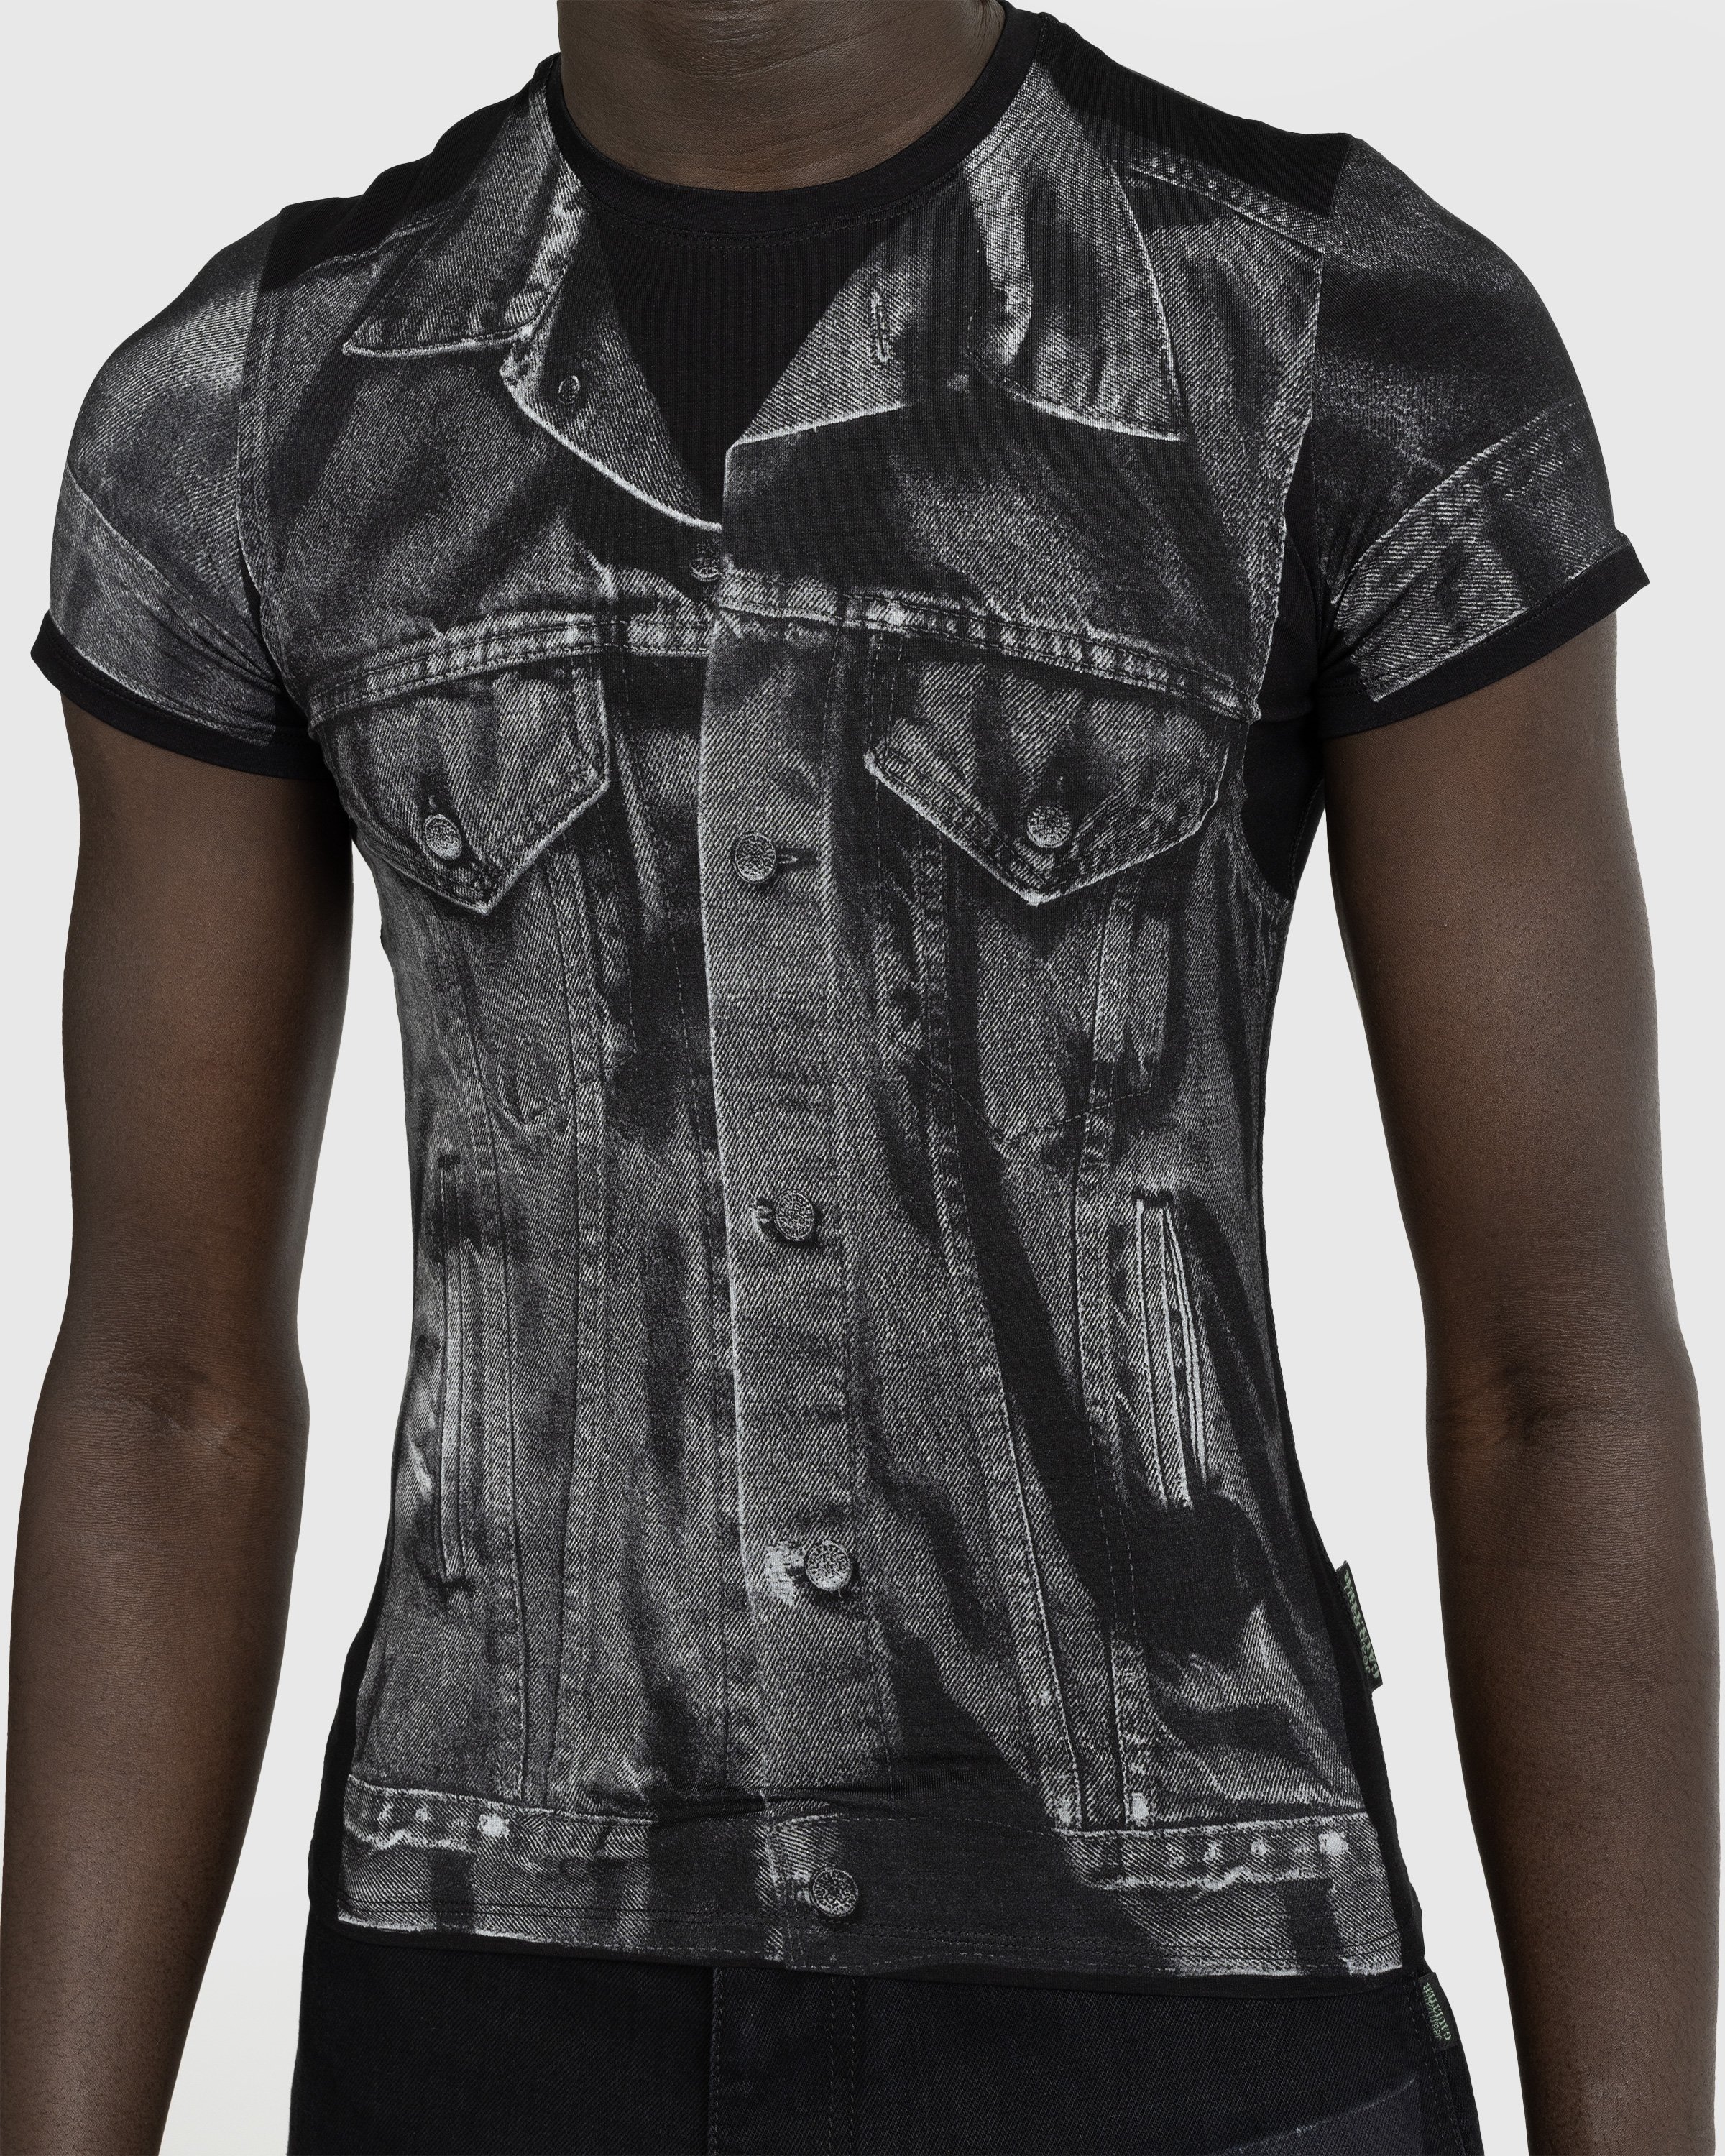 Jean Paul Gaultier - Denim Trompe L'oeil T-Shirt Black/Gray - Clothing - Black - Image 6